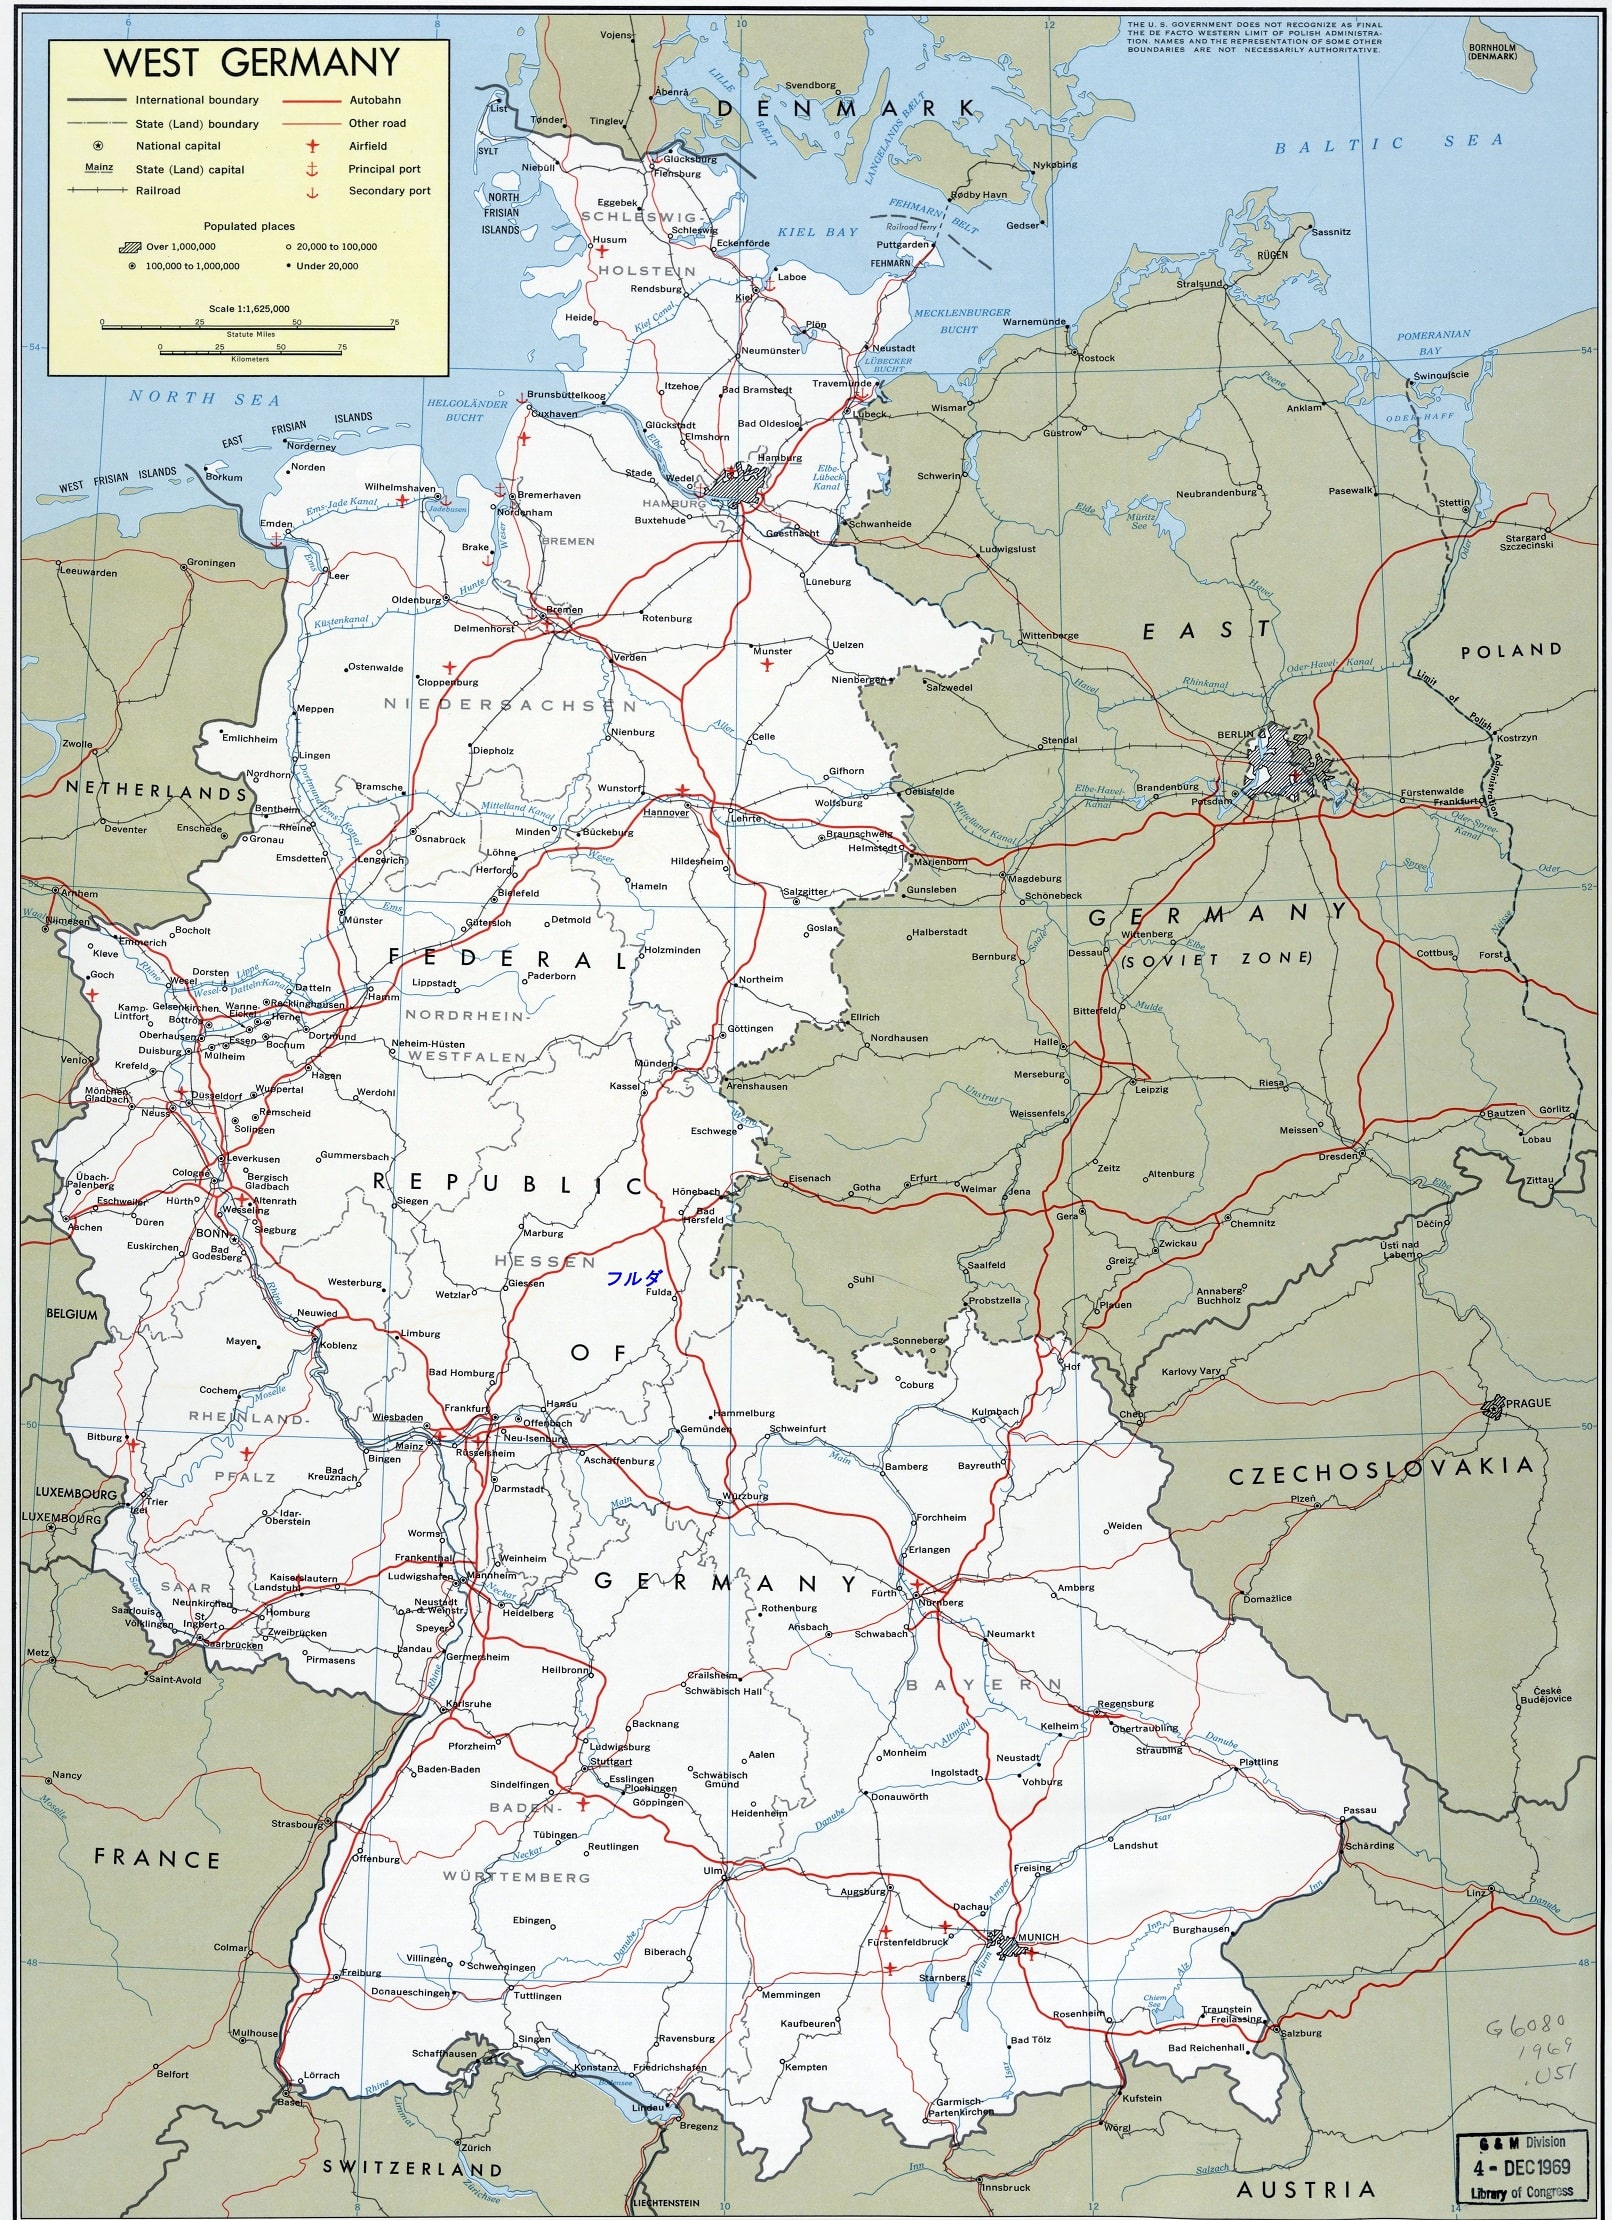 Nato軍の中央ドイツ戦域図上演習 1980 機甲戦 ドイツ国防軍の将軍との議論 戦史の探求